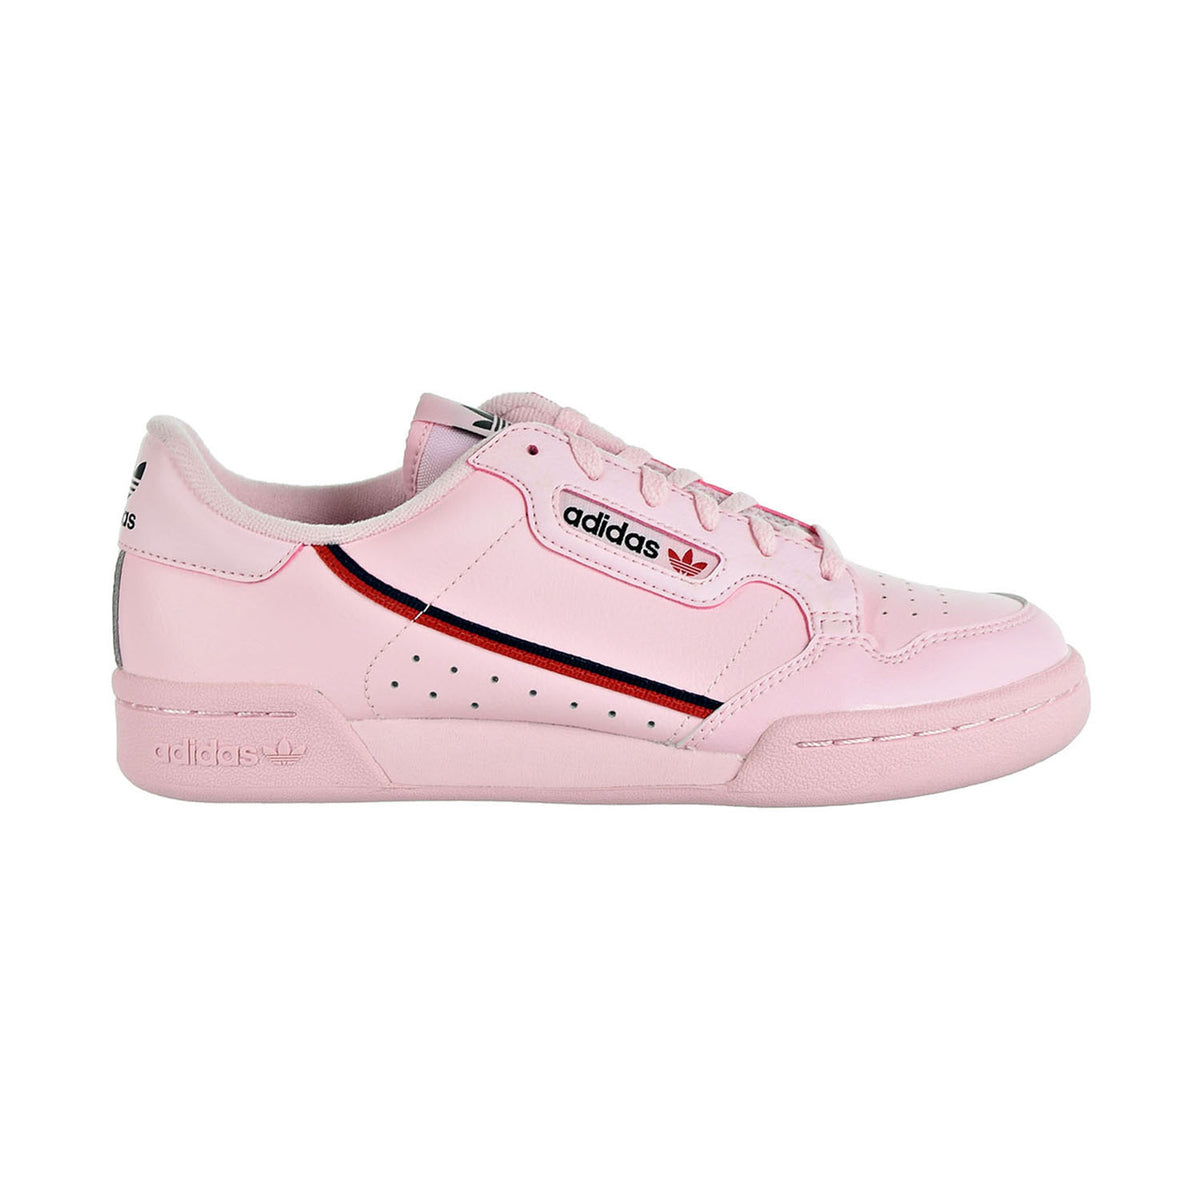 Adidas Continental 80 Big Kids Shoes Pink/Scarlet/Collegiate Nav